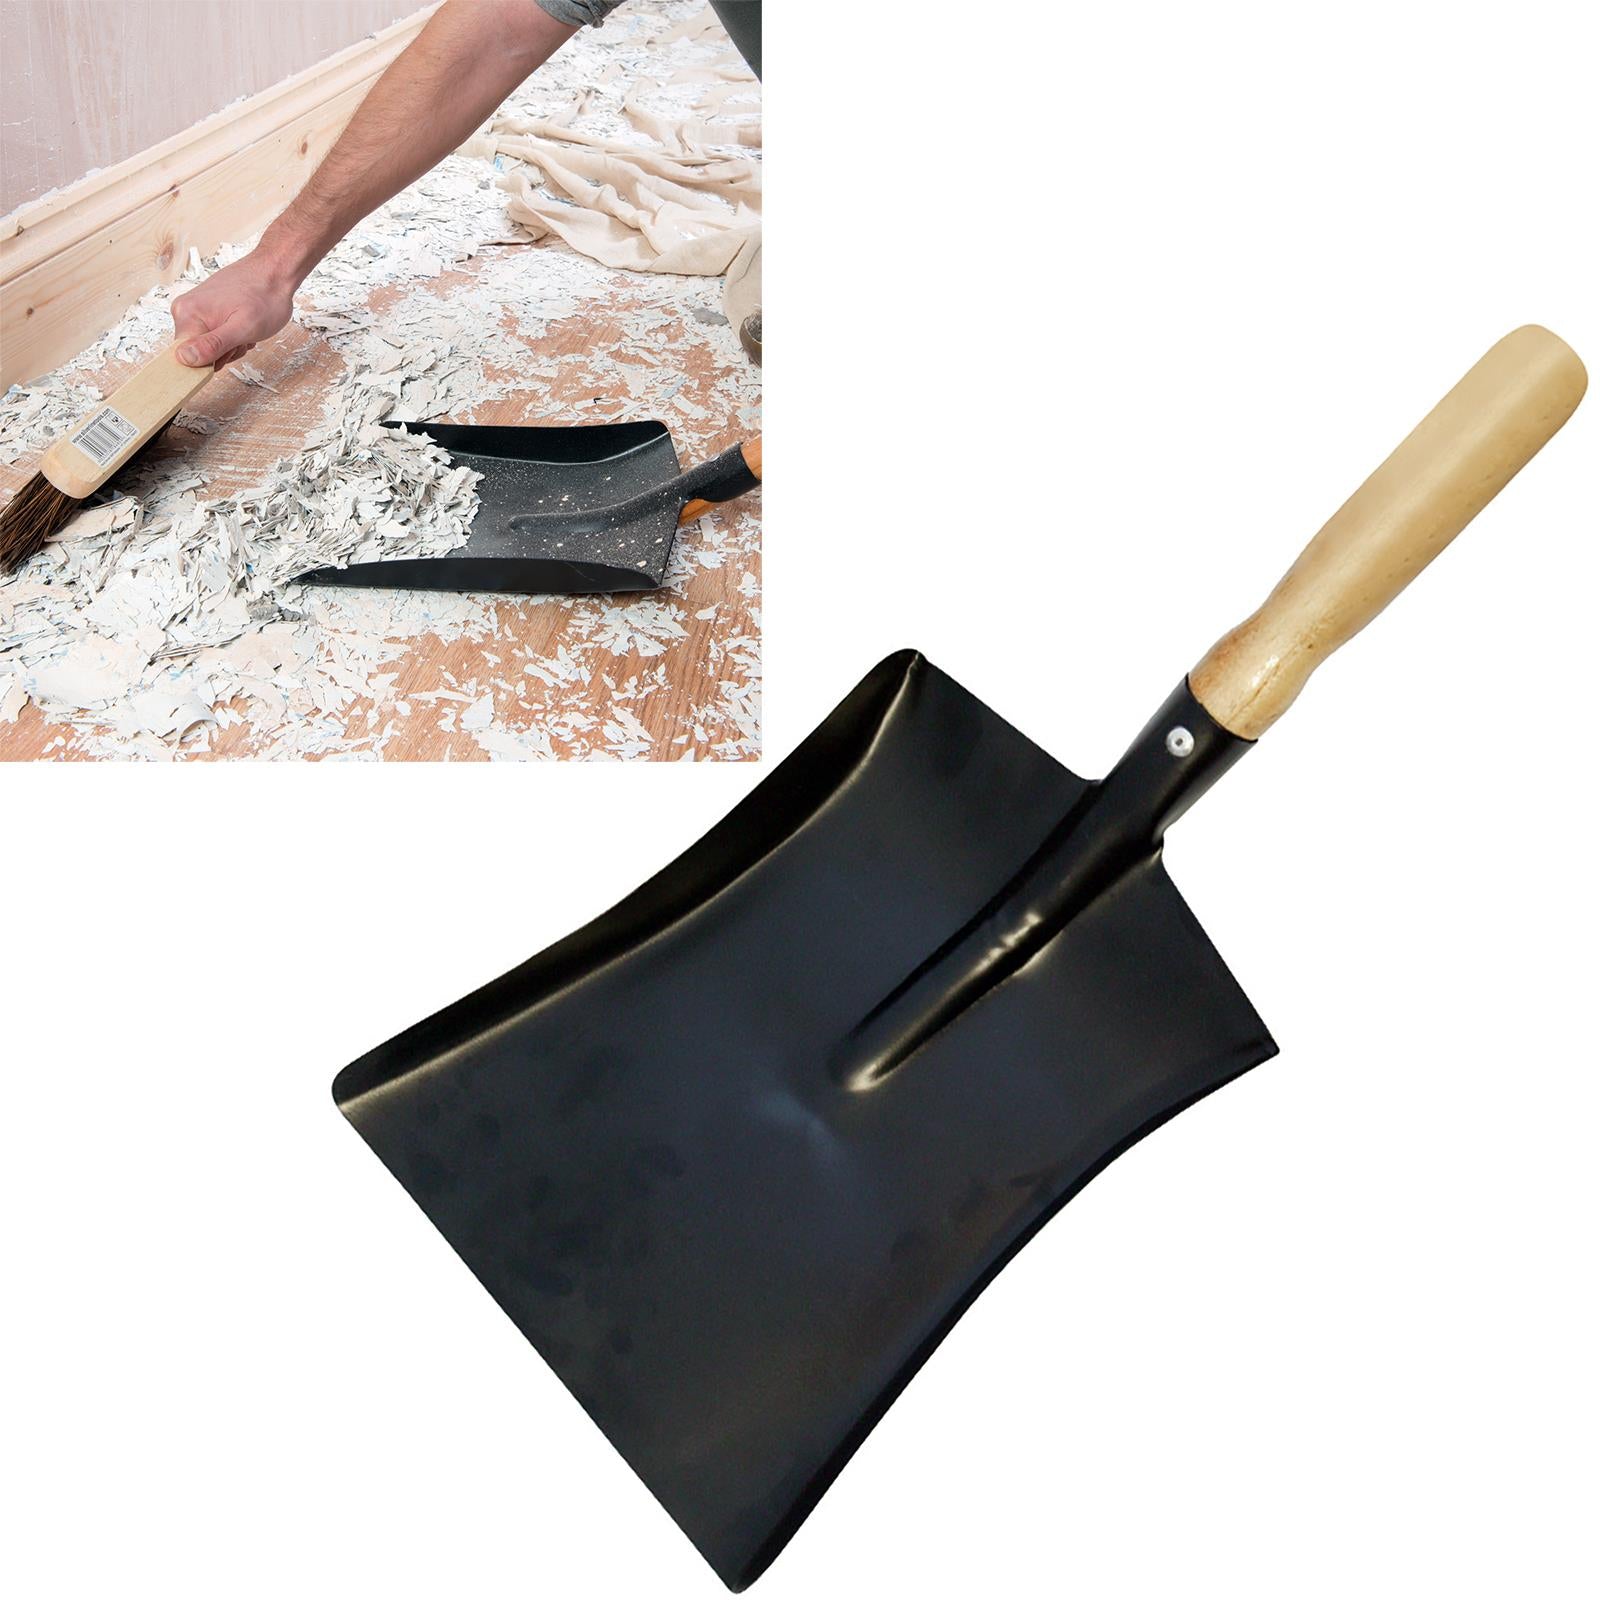 Silverline 230mm Dust Pan Hardwood Handle Cleaning Dirt Scoop Shovel Steel